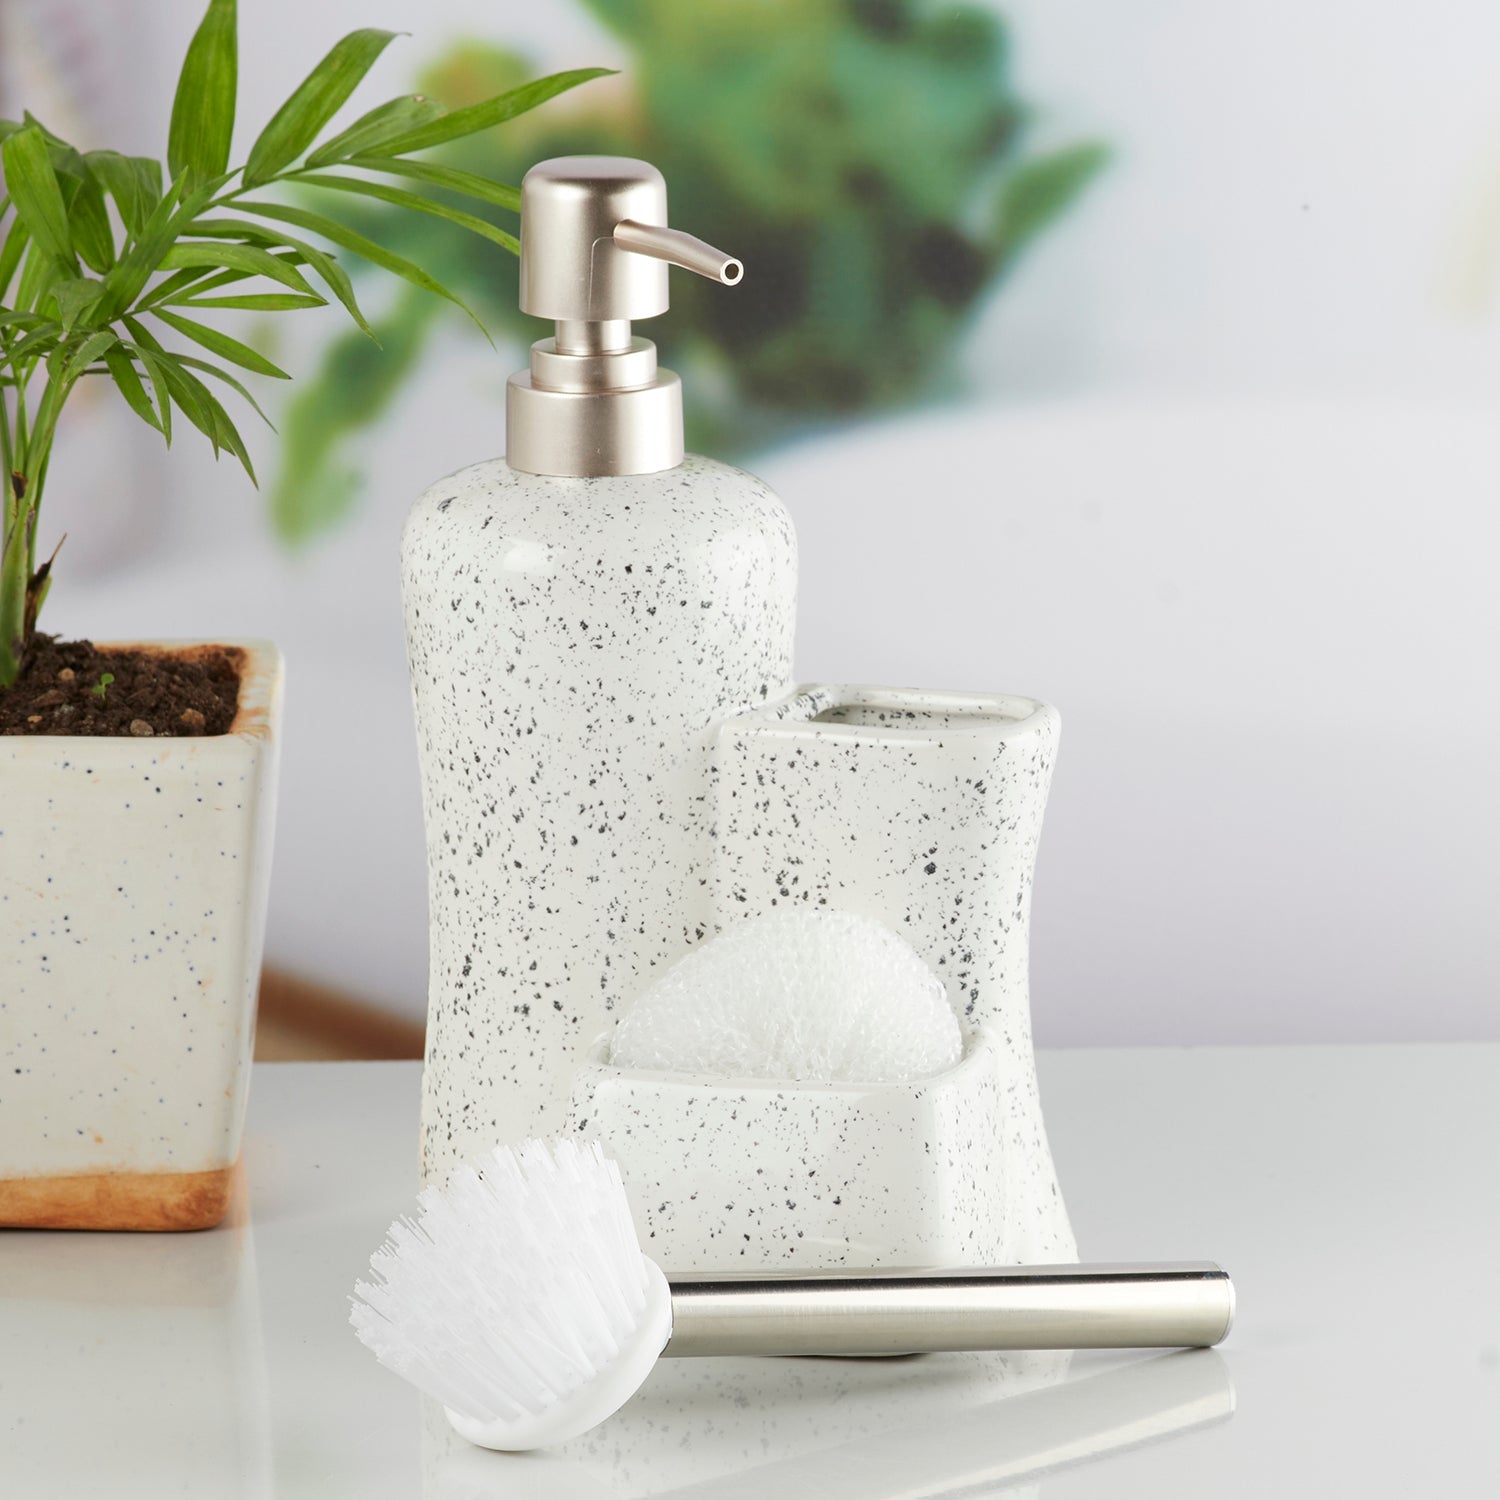 Ceramic Soap Dispenser handwash Pump for Bathroom, Set of 1, White (10306)